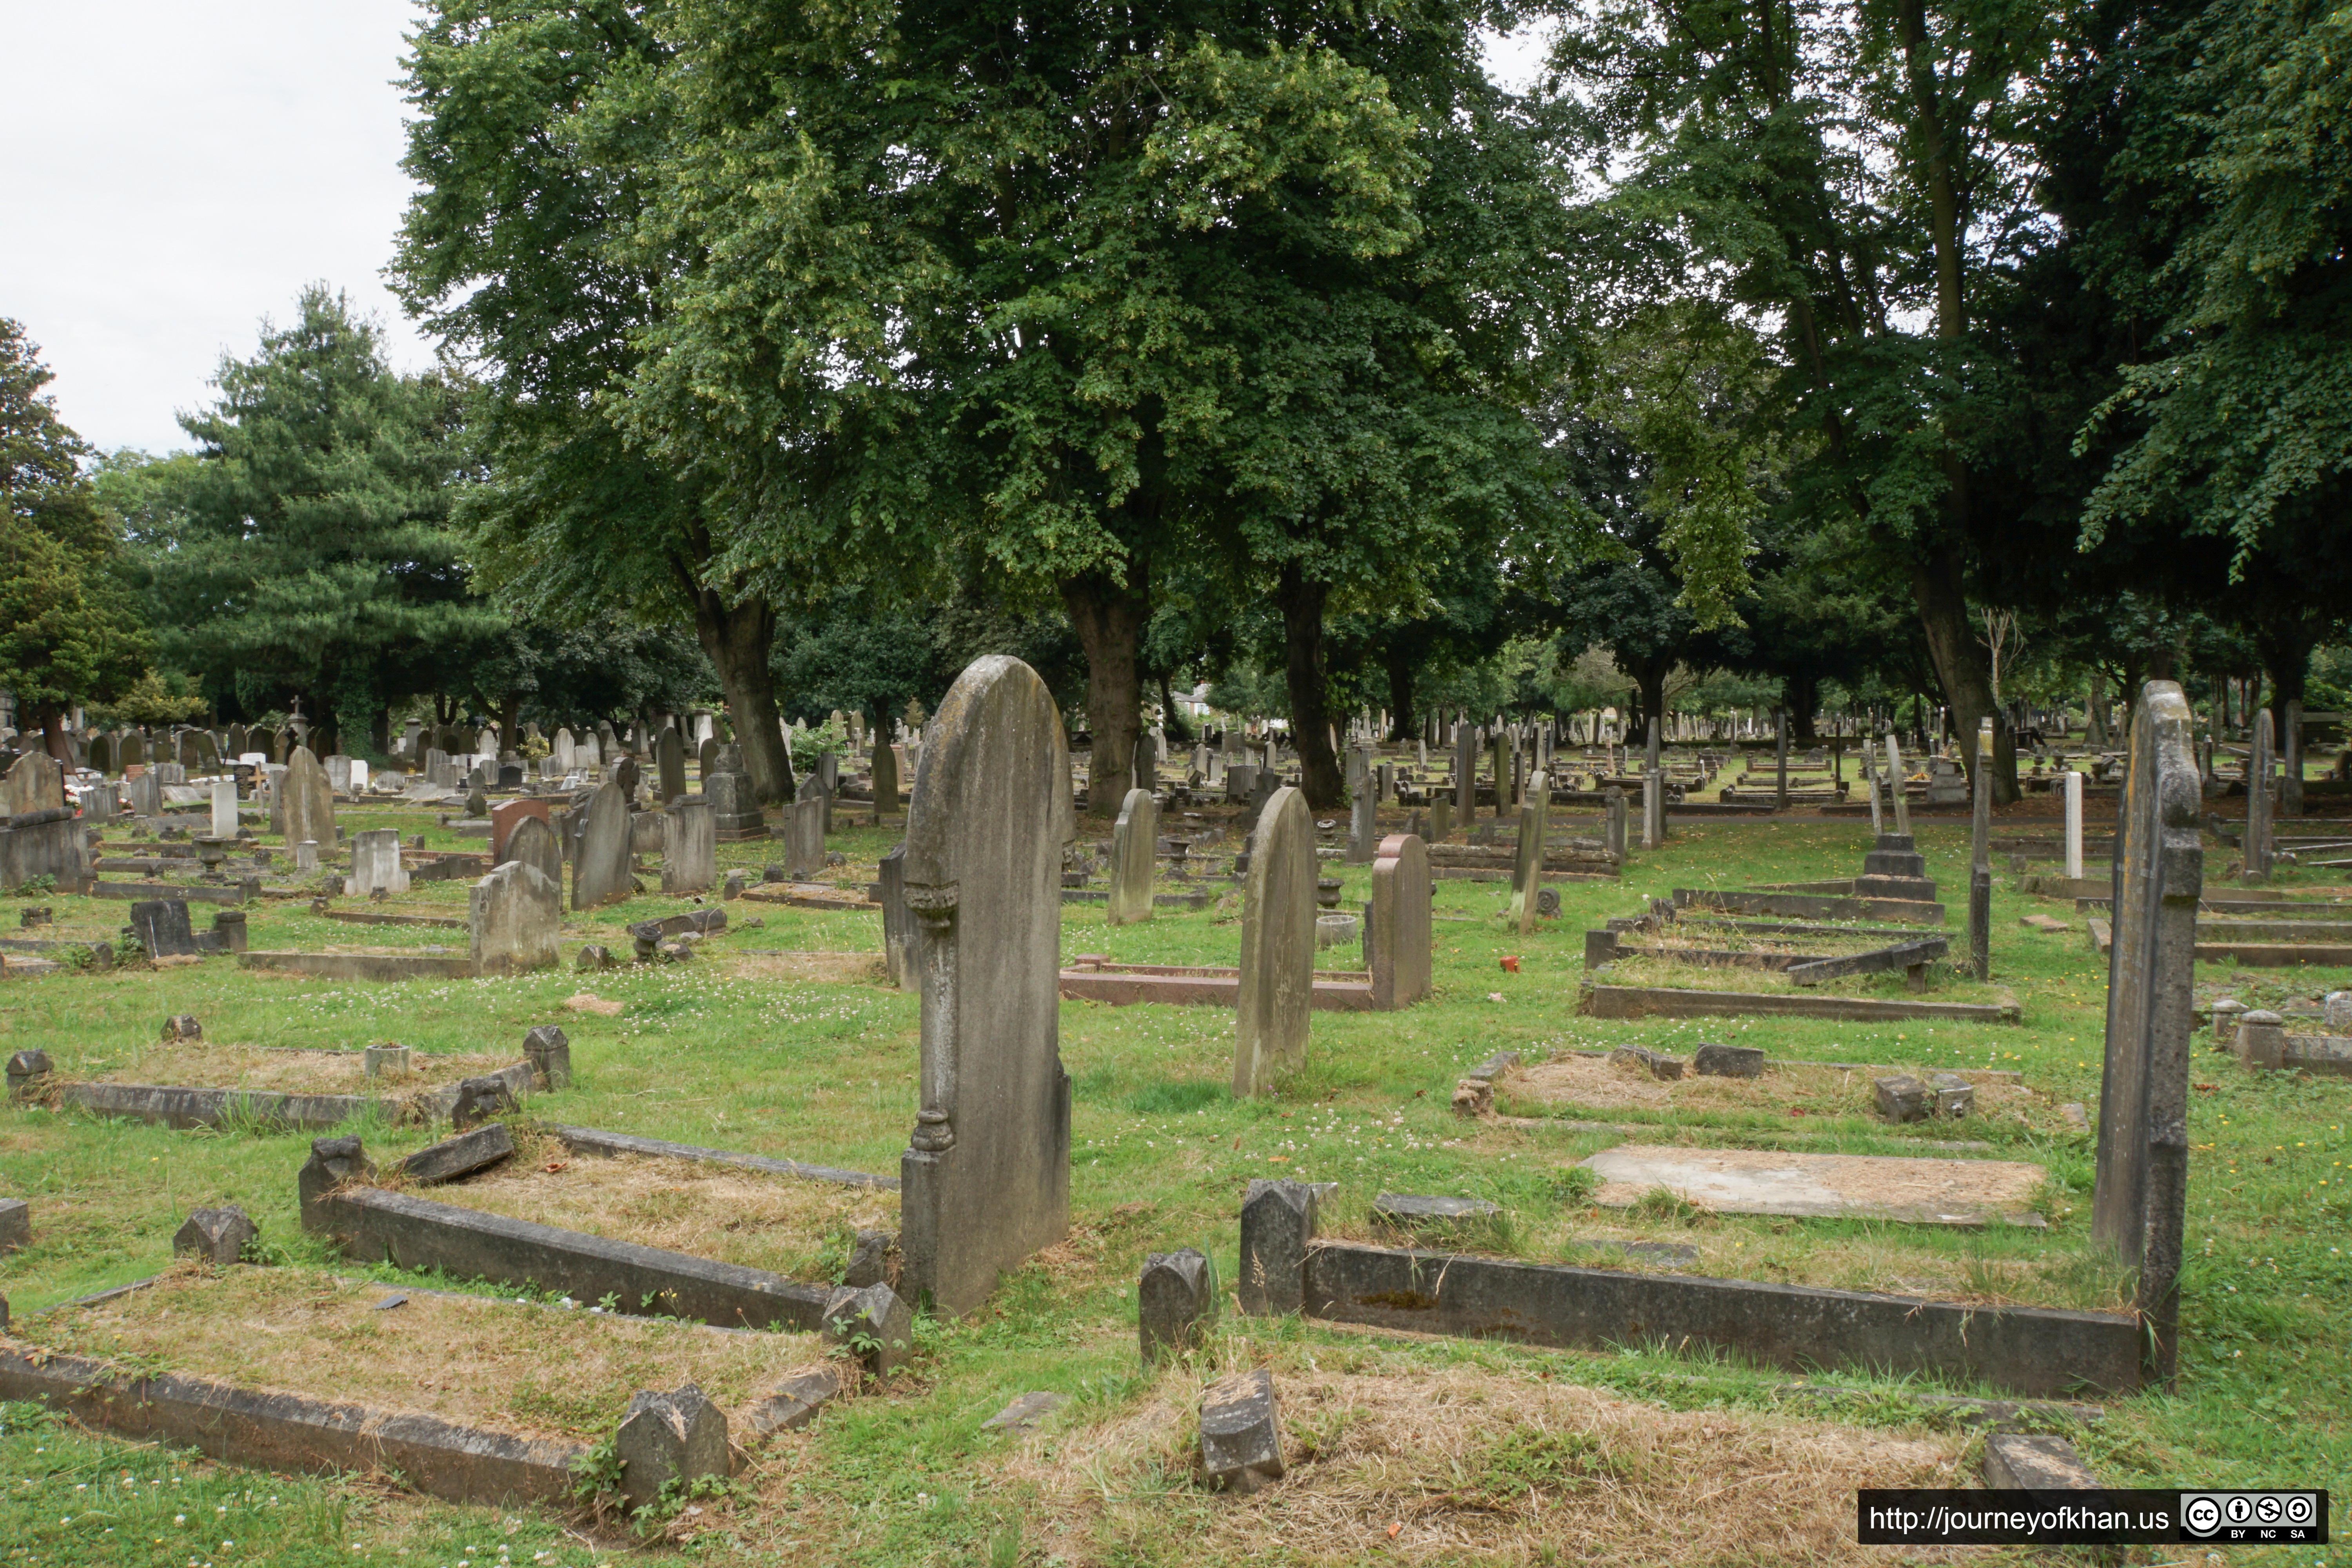 Graves in Tottenham Cemetery (High Resolution)